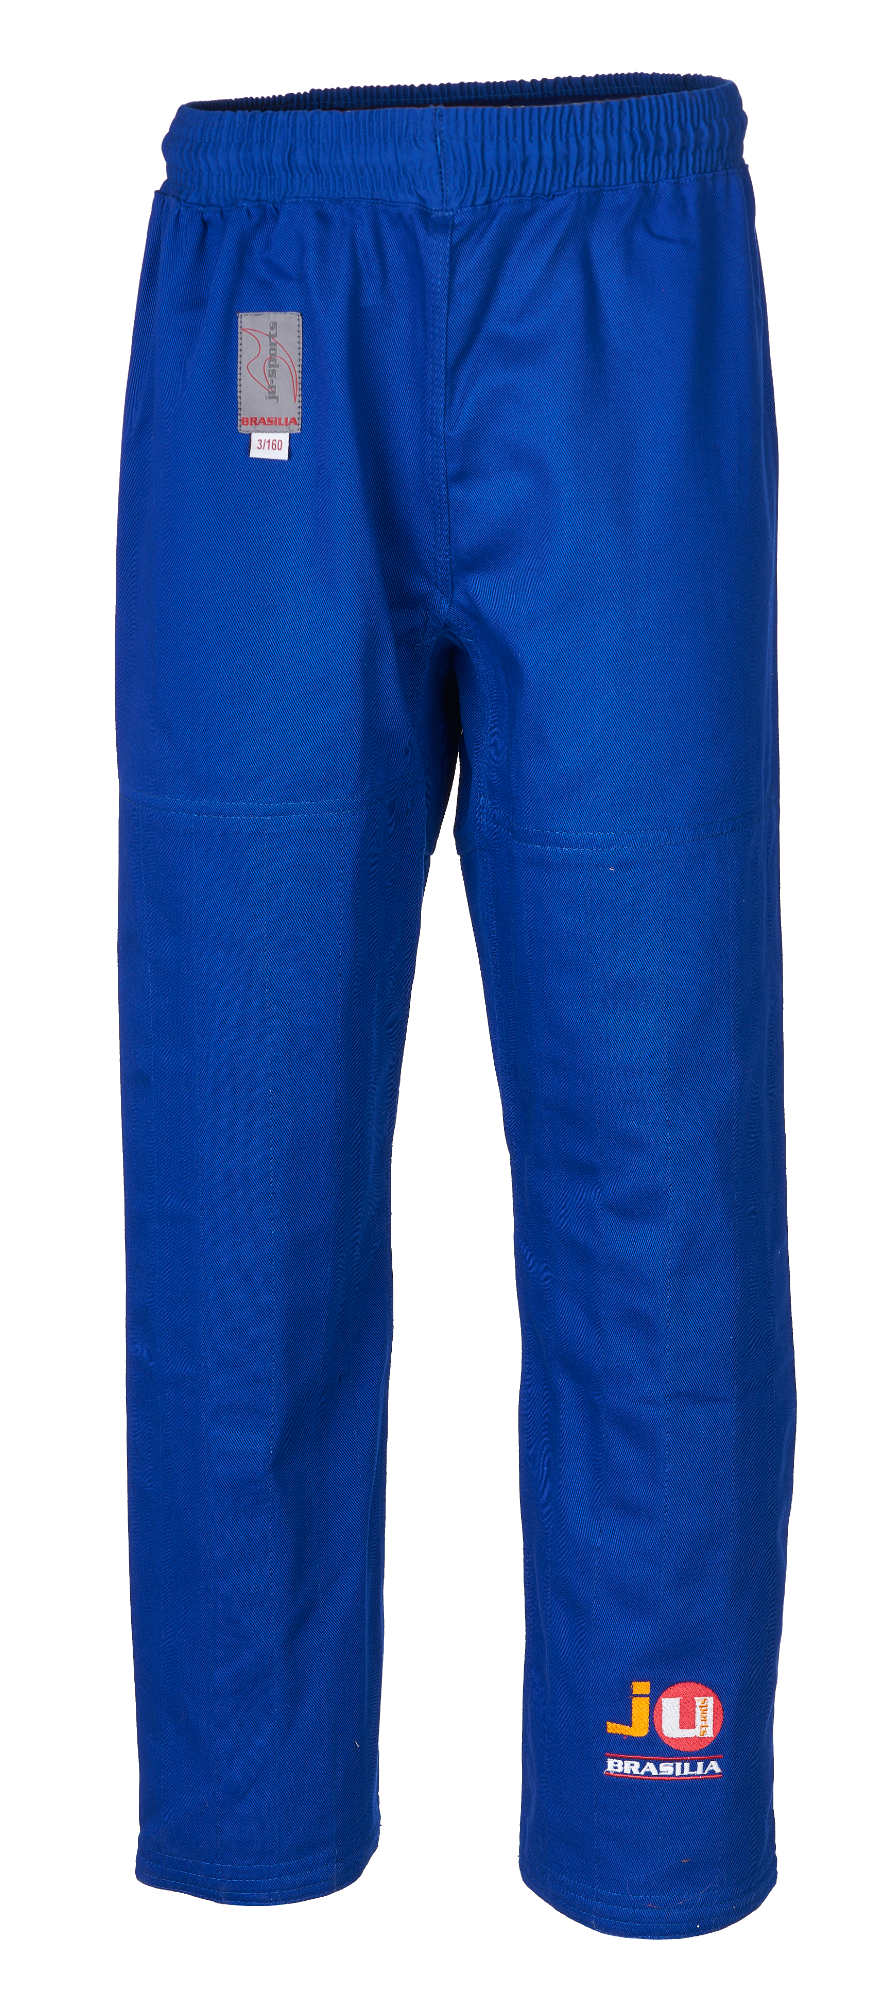 Judo pants Brasilia blue, elastic waistband